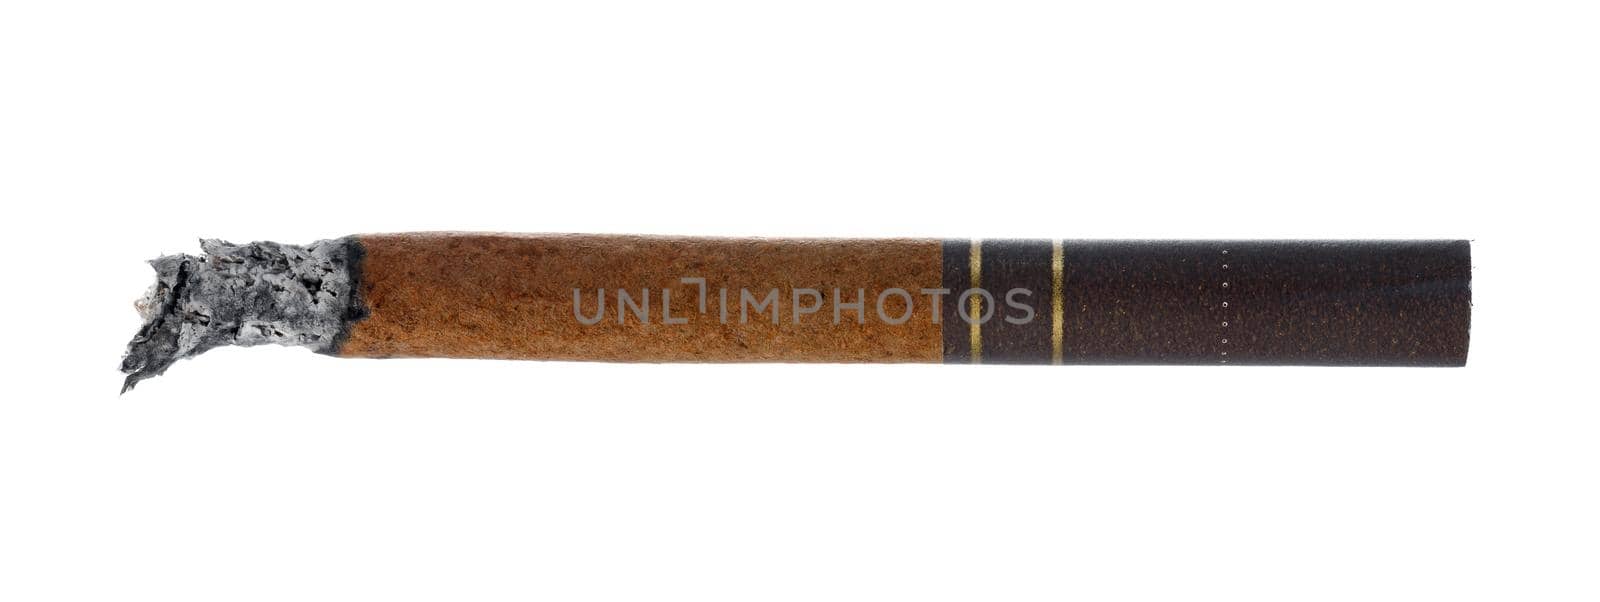 Burning cigarette isolated on white background close up by Fabrikasimf